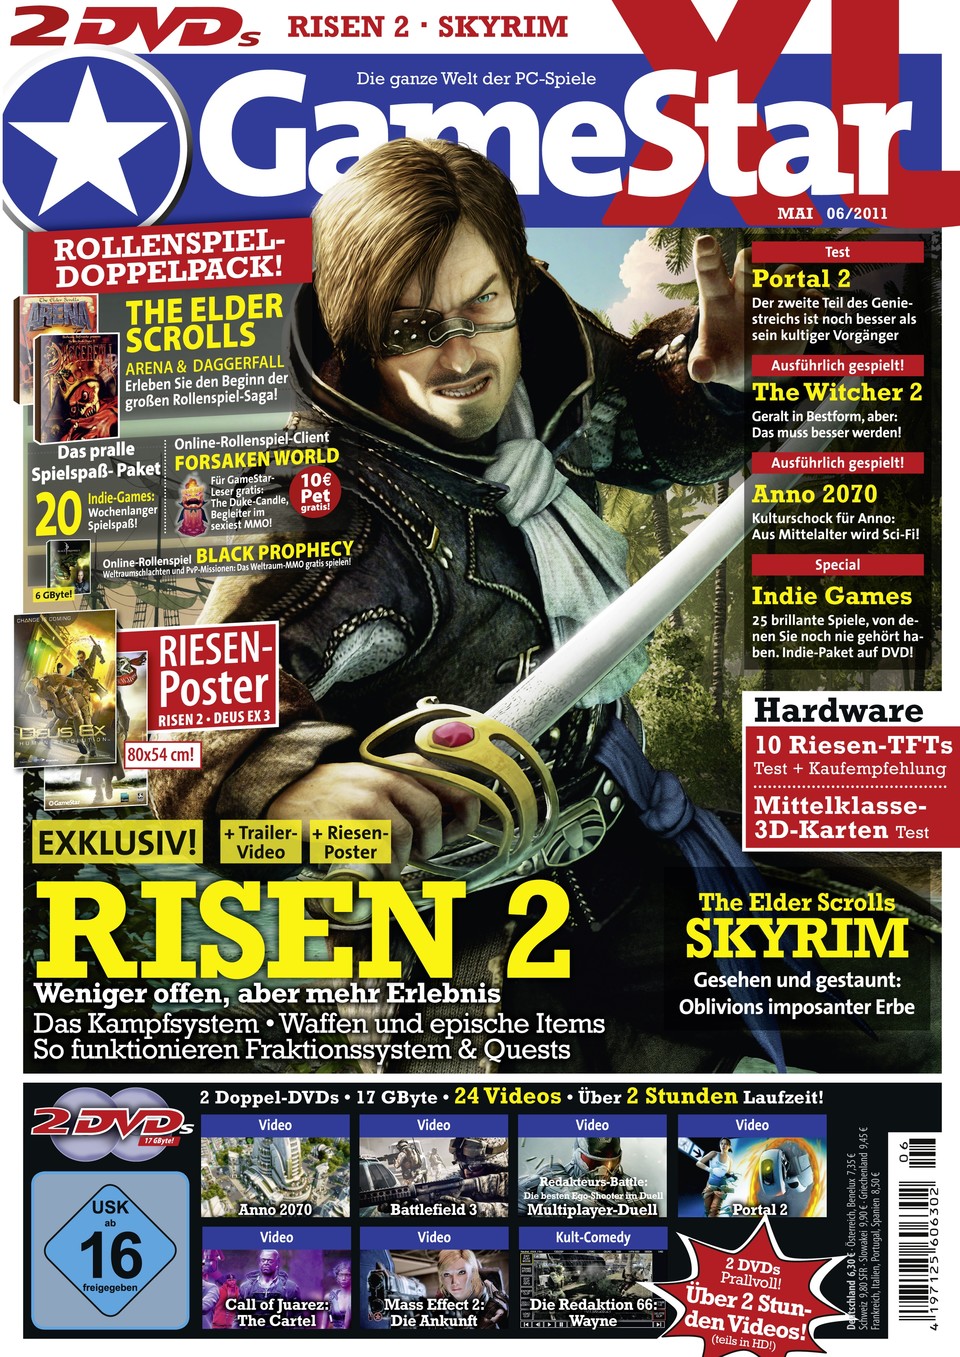 GameStar 06/2011 mit Risen 2 als Titelthema ab 27. April am Kiosk